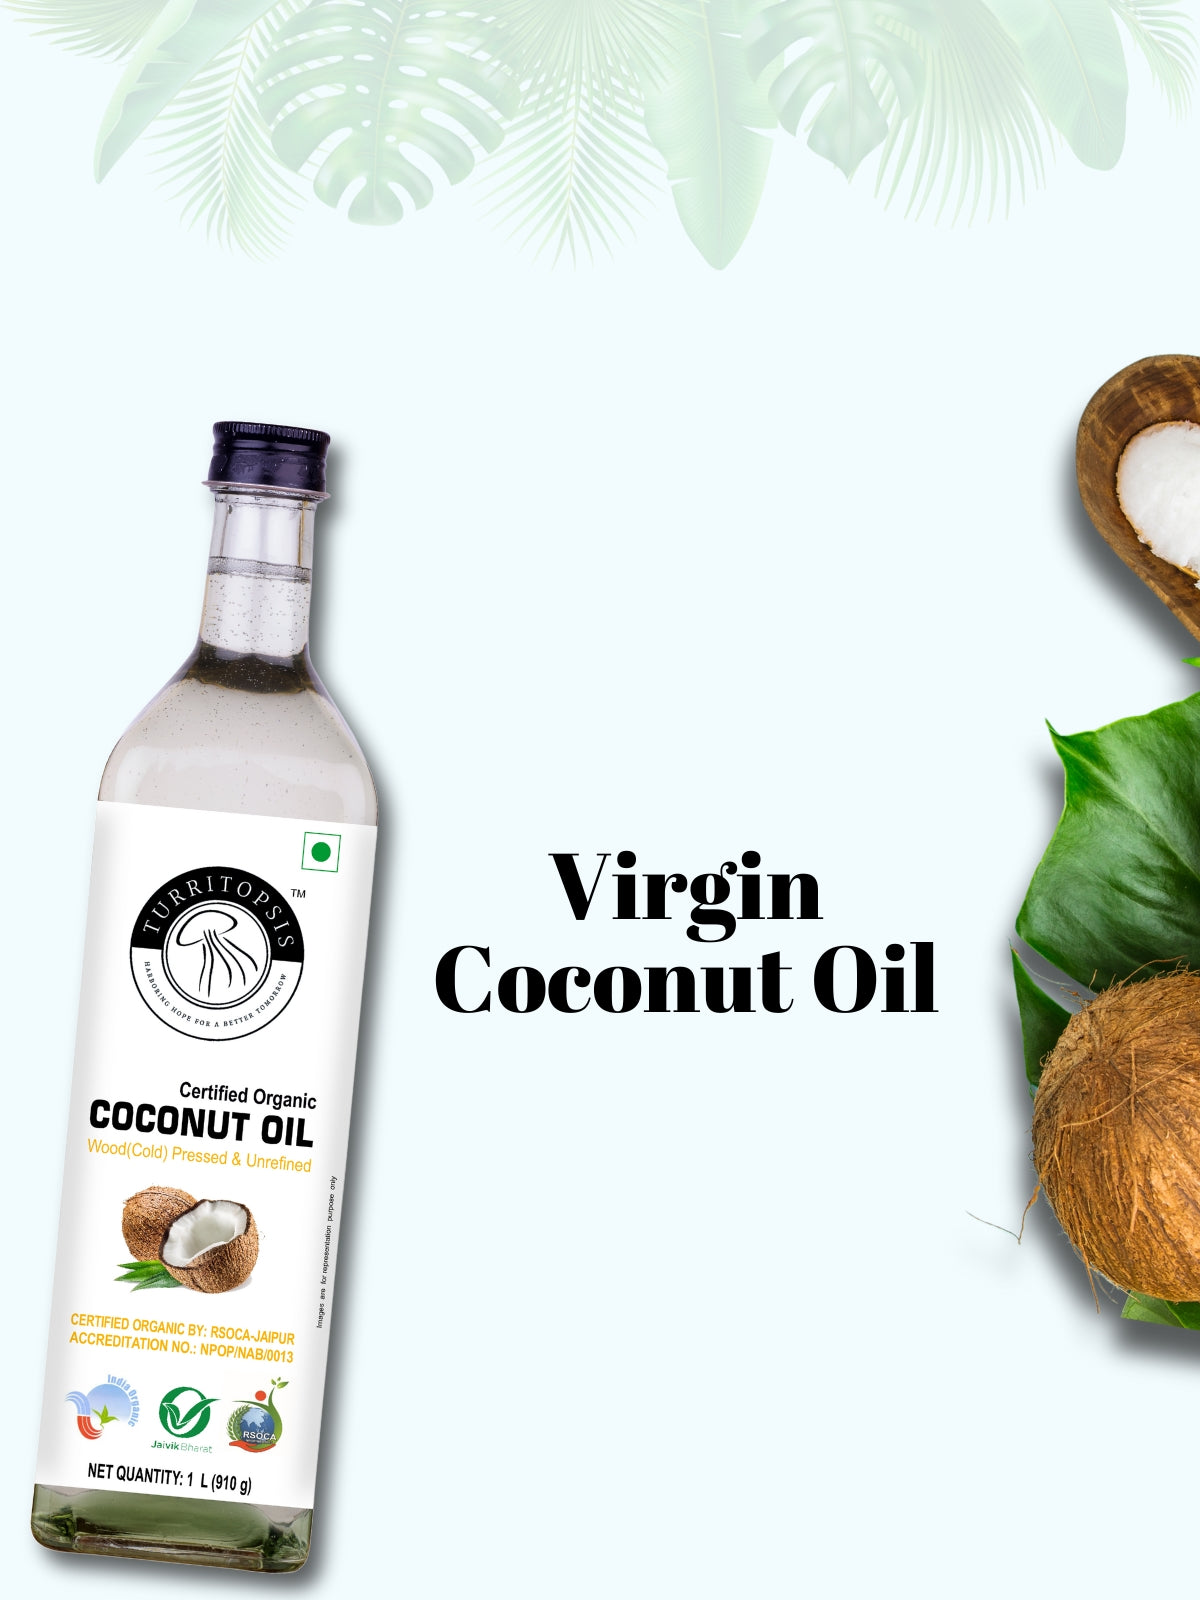 Cold pressed virgin coconut oil